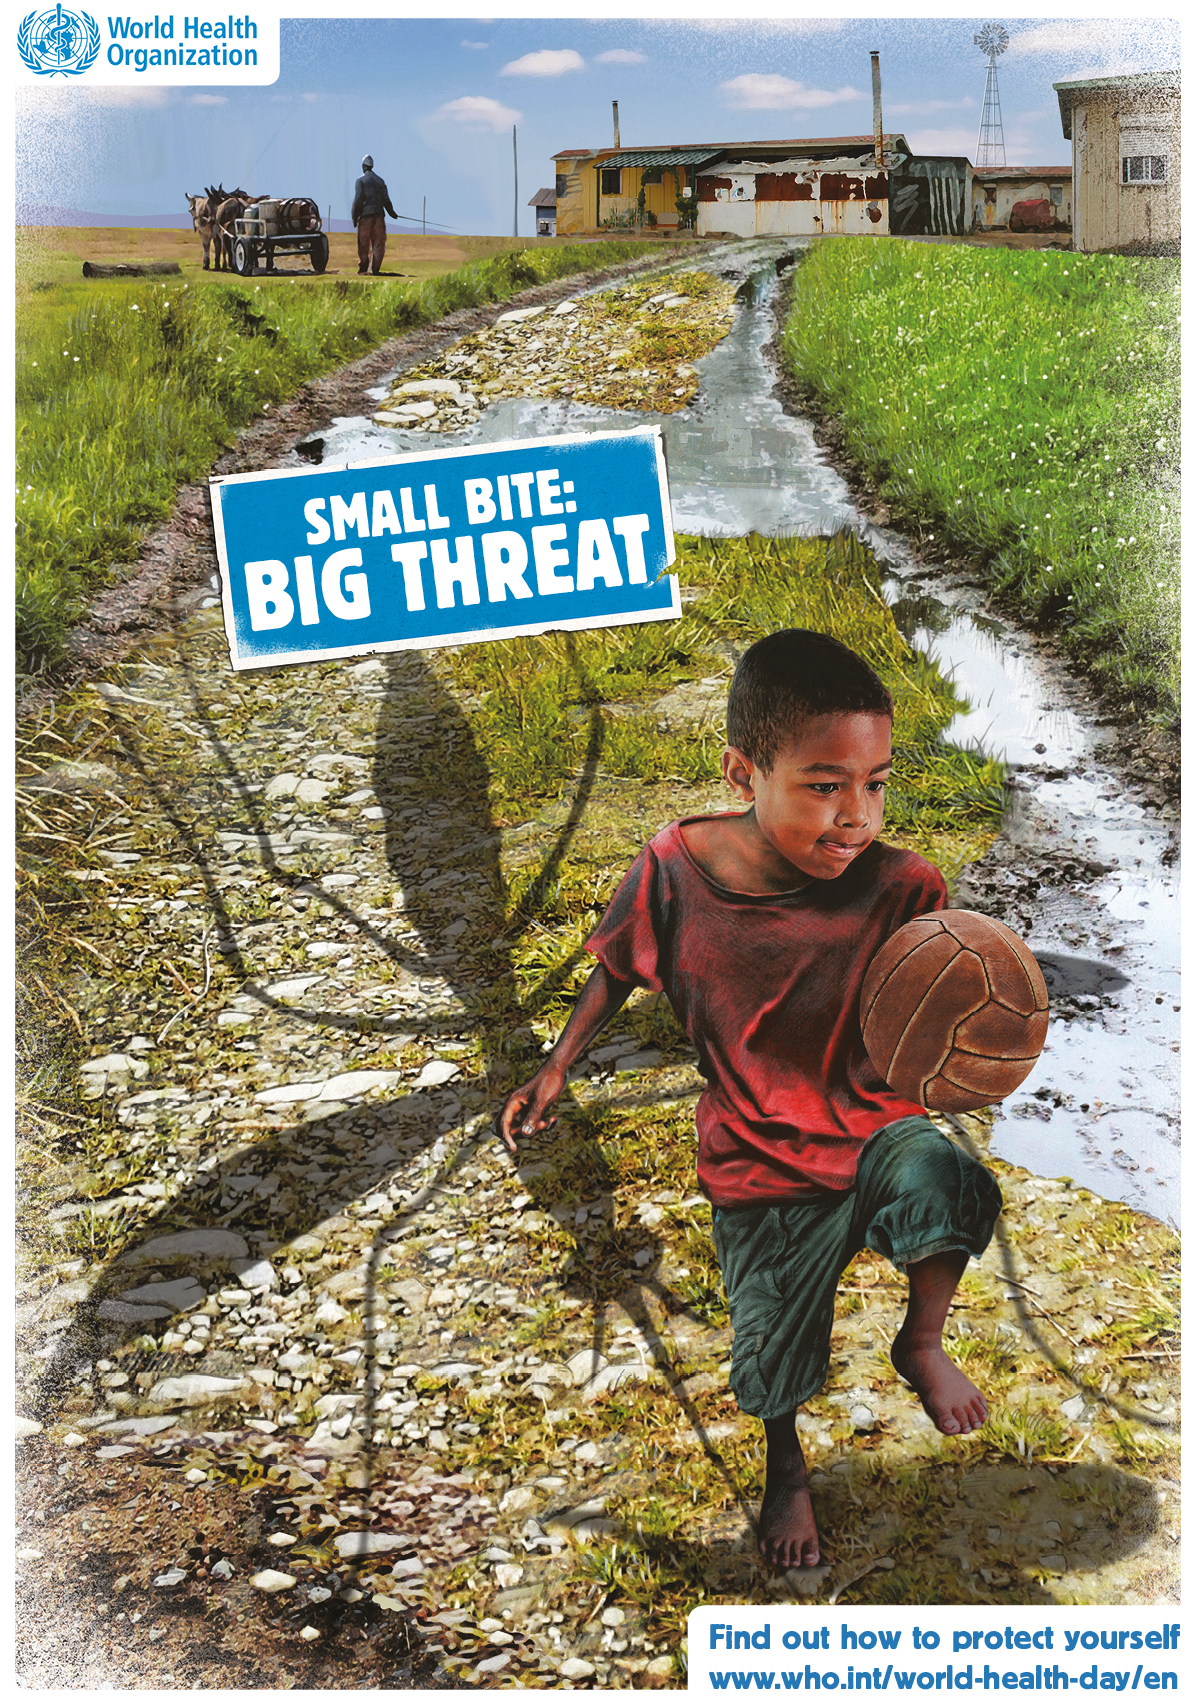 Small bite, big threat (World Health Day 2014)